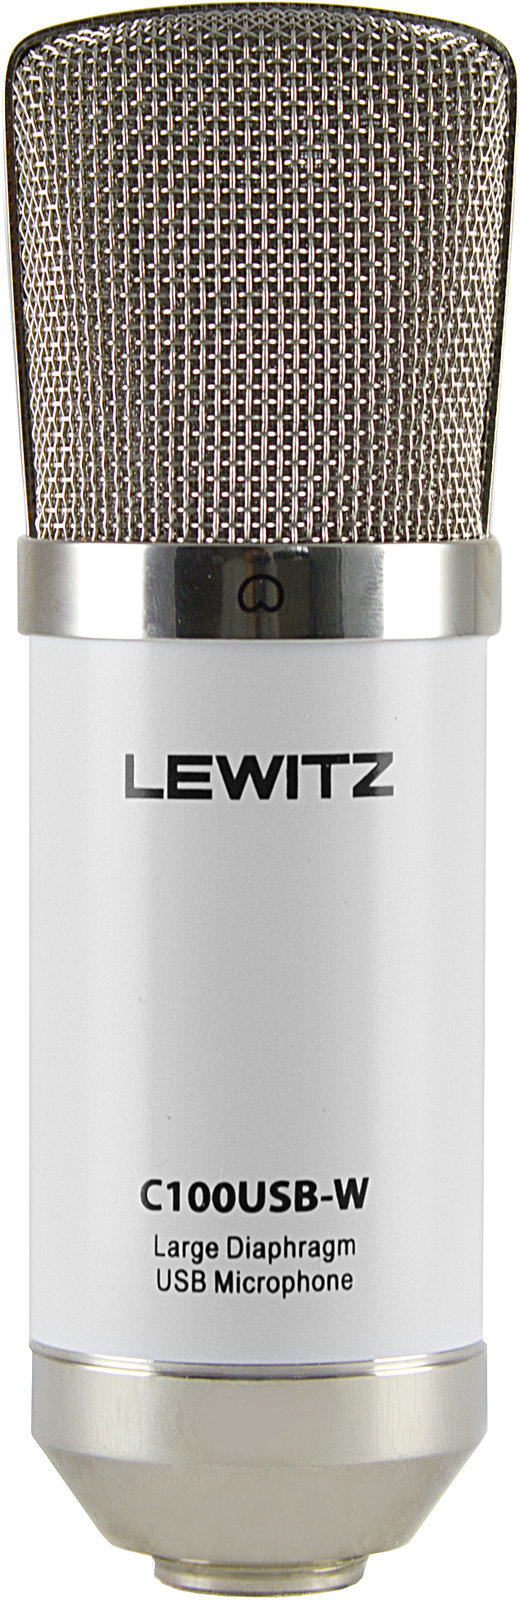 Microphone USB Lewitz C120USB